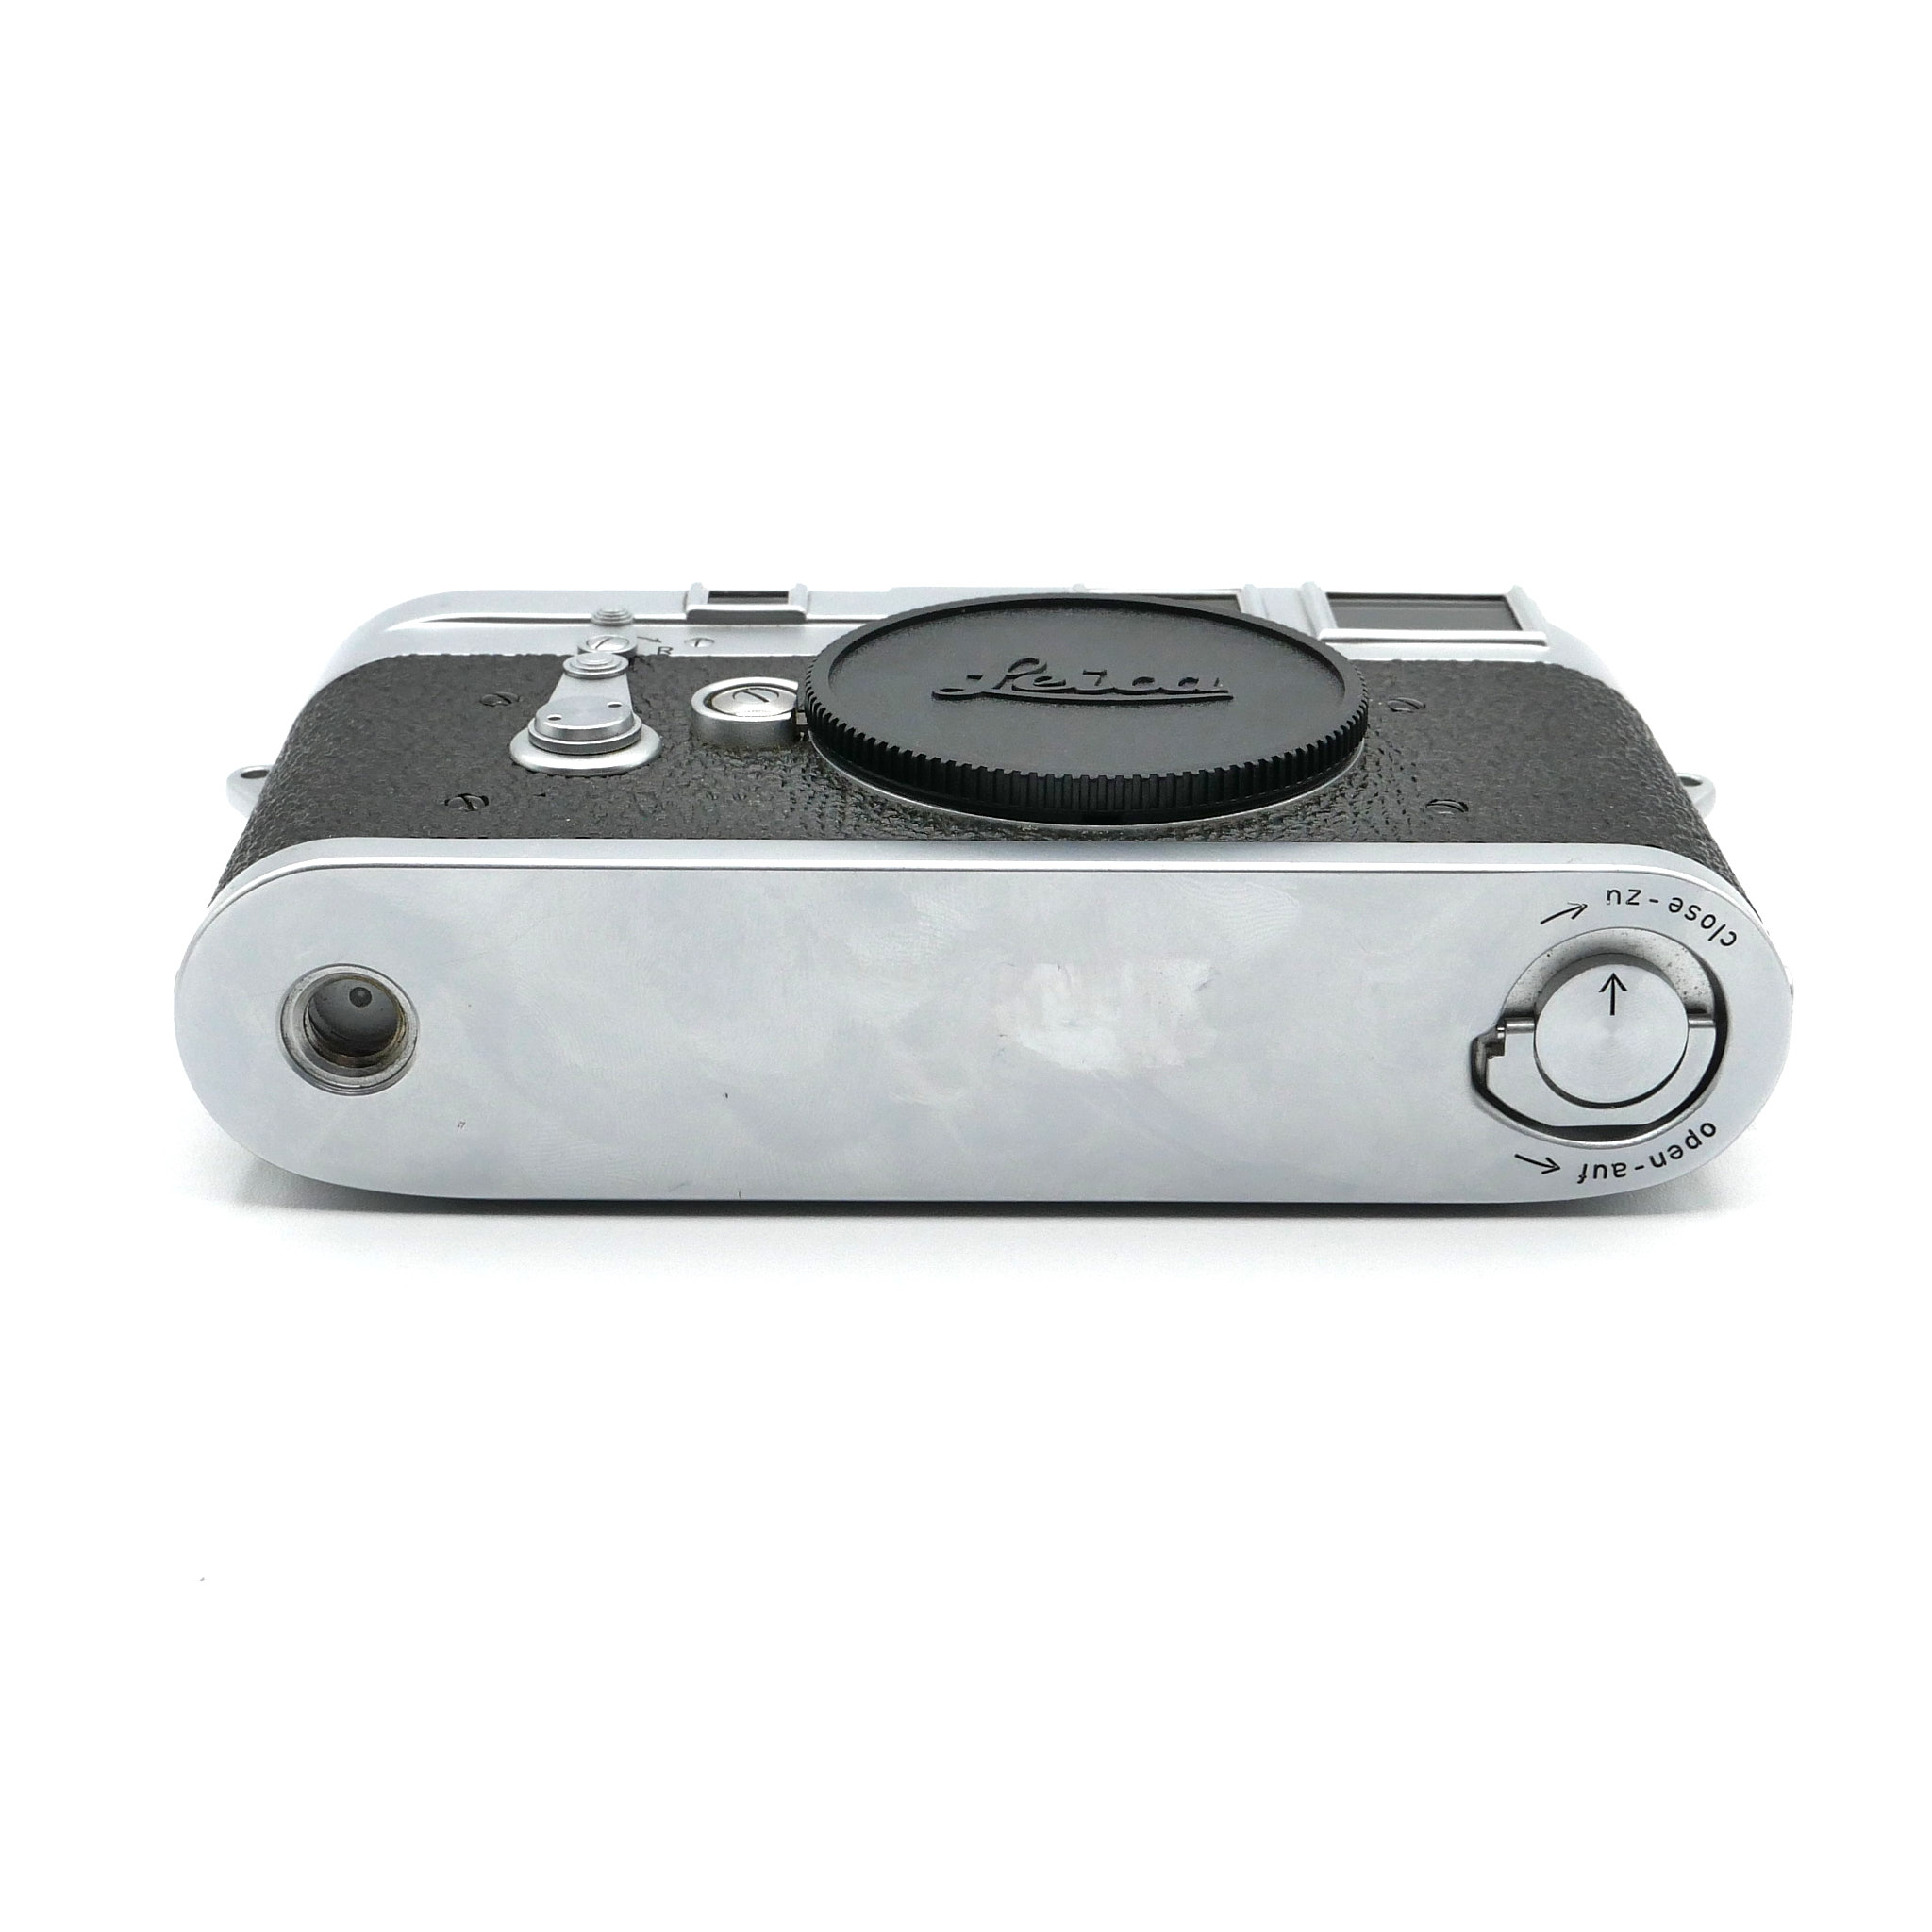 Leica M3 Double Stroke 